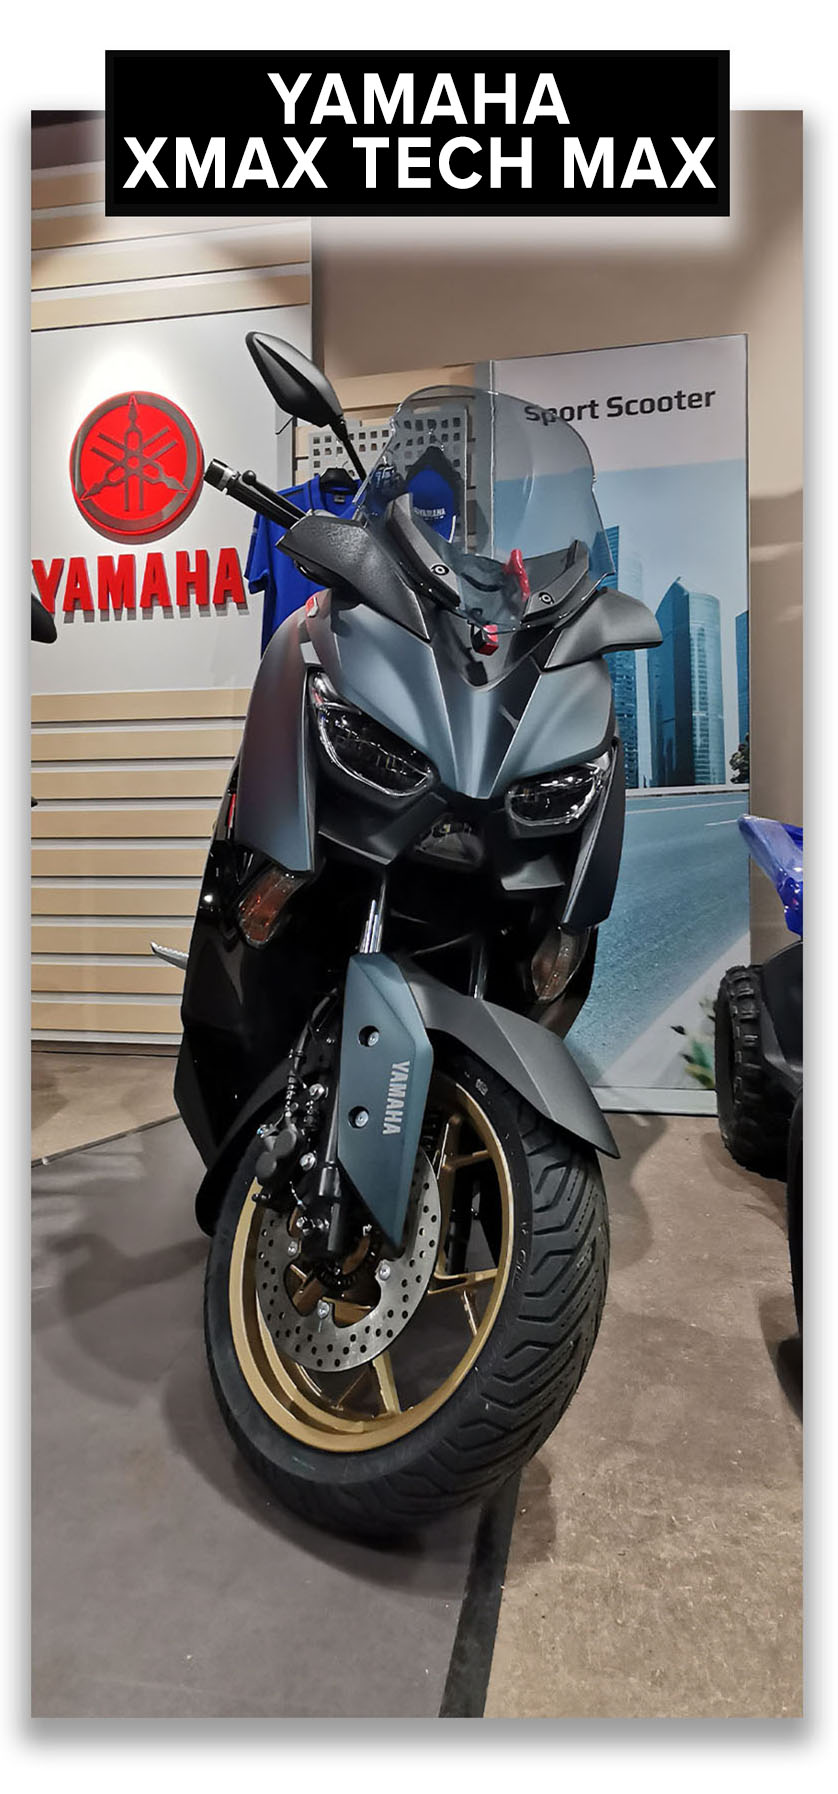 Yamaha Xmax 300 Tech Max available at Laguna Motorcycles in Maidstone.